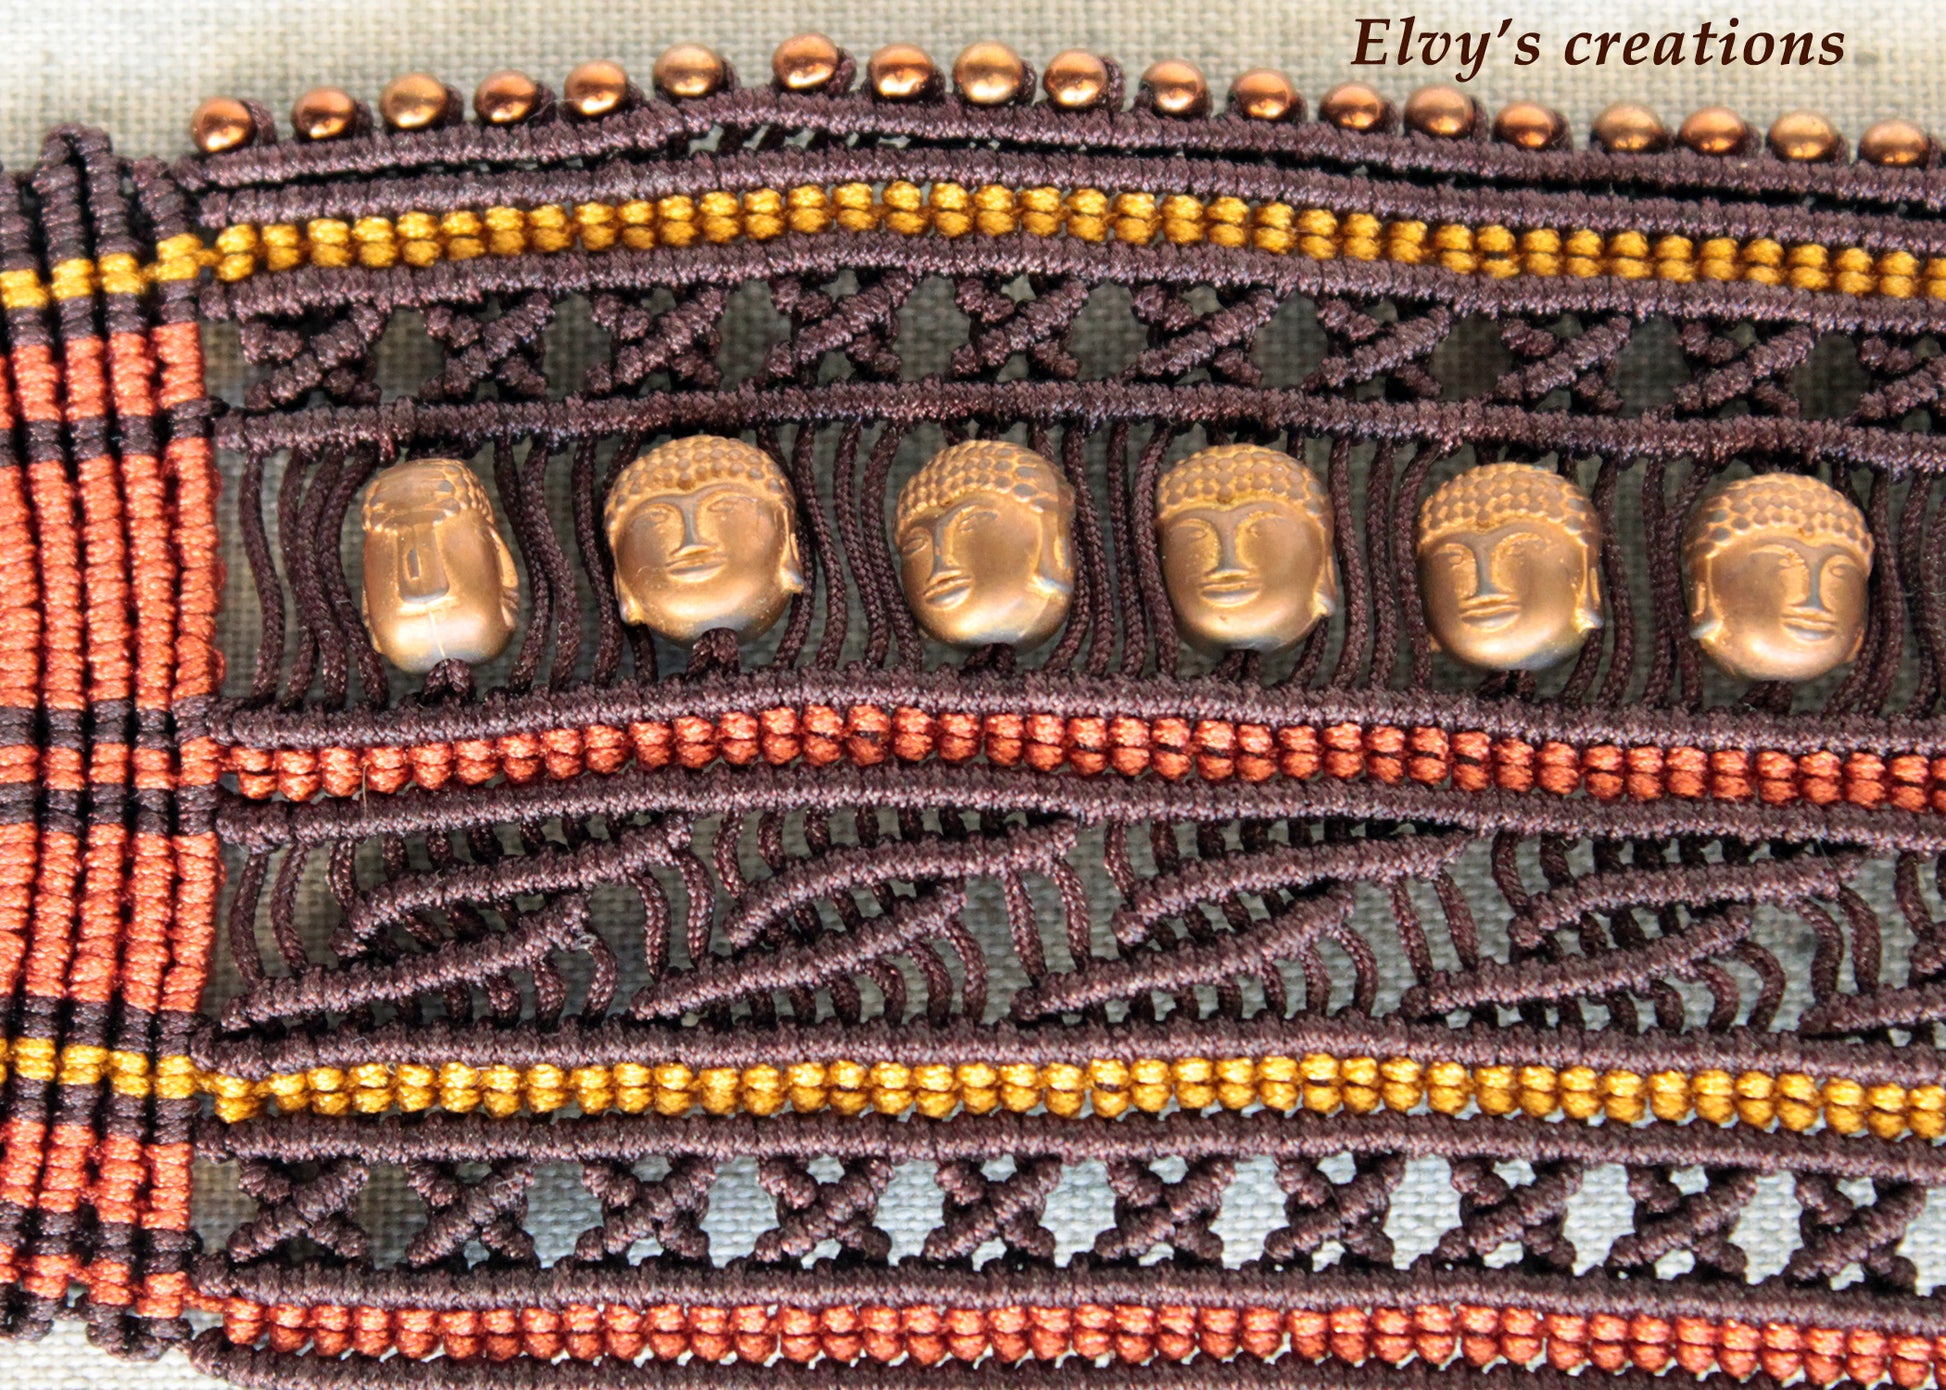 Brown Macrame Cuff Bracelet with Bronze Hematite Beads and Buddha Head Shaped Beads